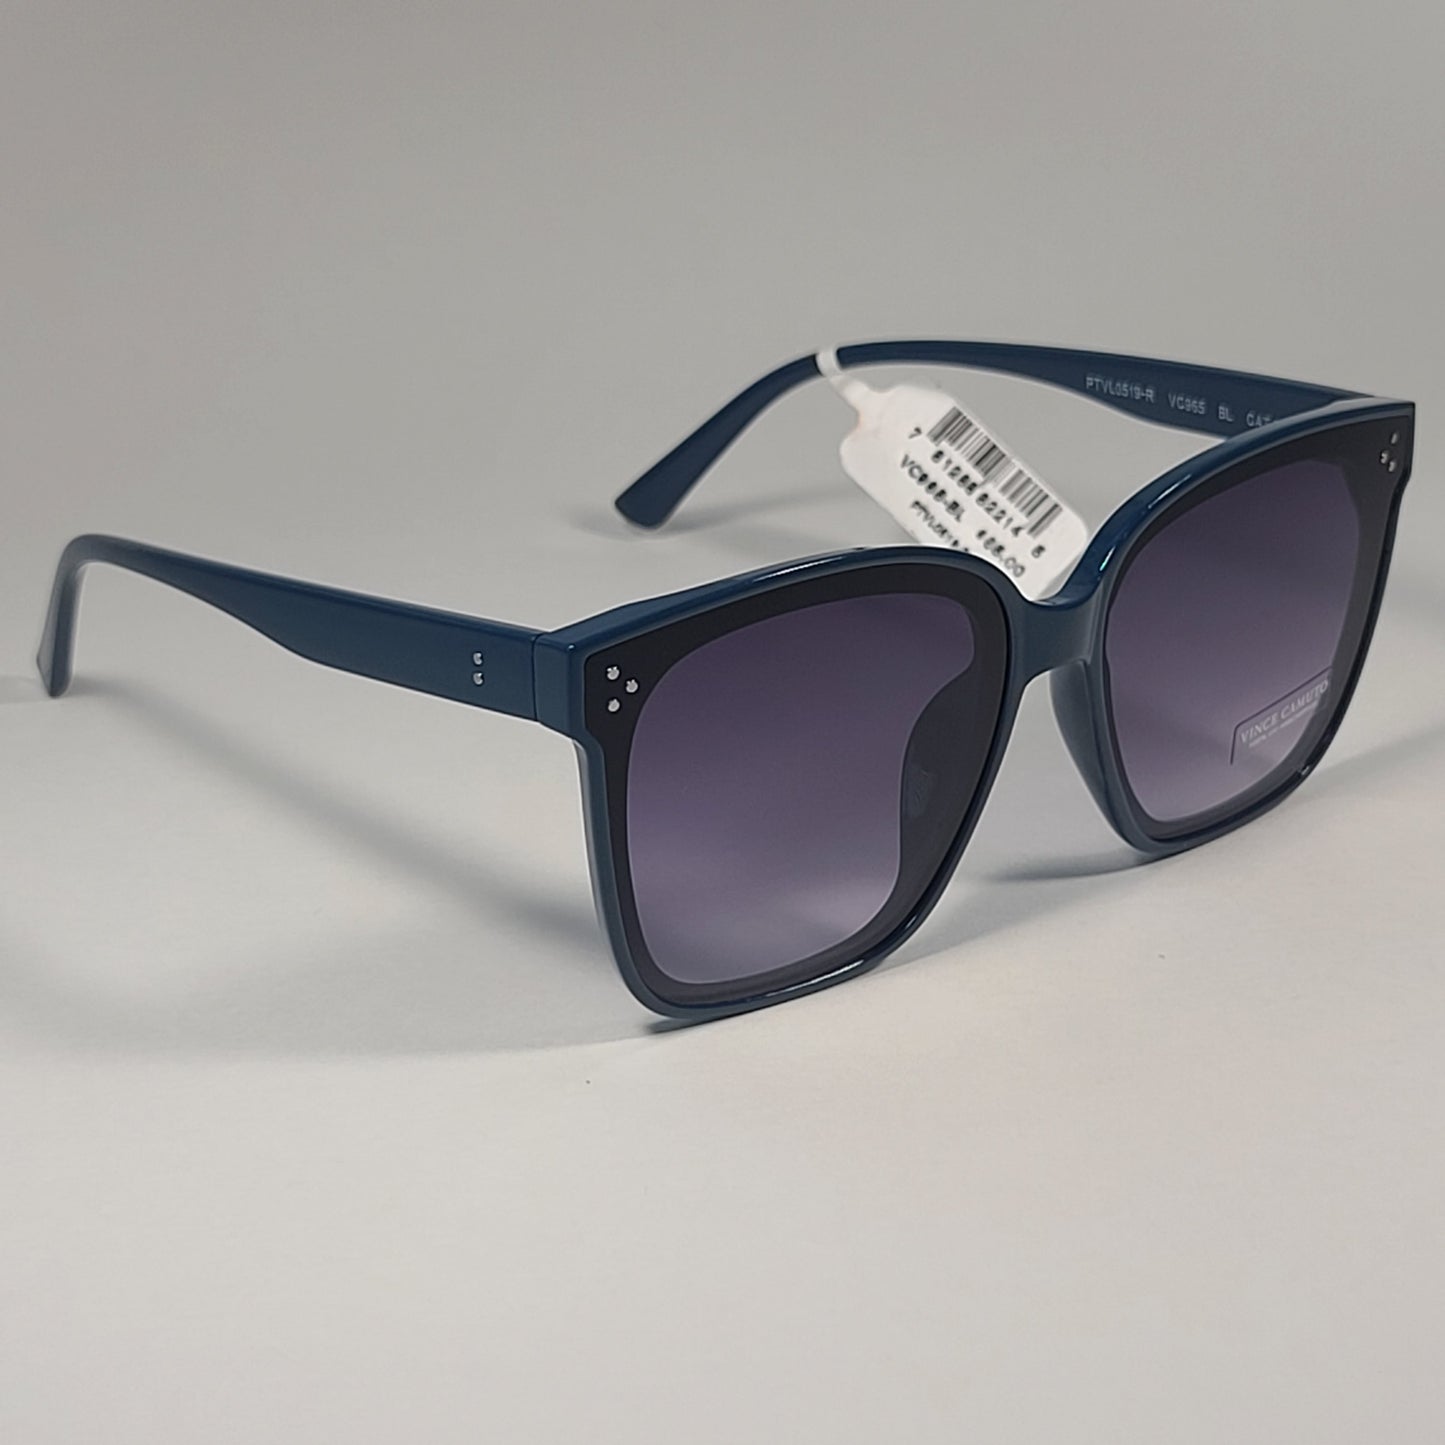 Vince Camuto VC965 BL Oversize Sunglasses Blue Frame Gray Smoke Gradient Lens - Sunglasses